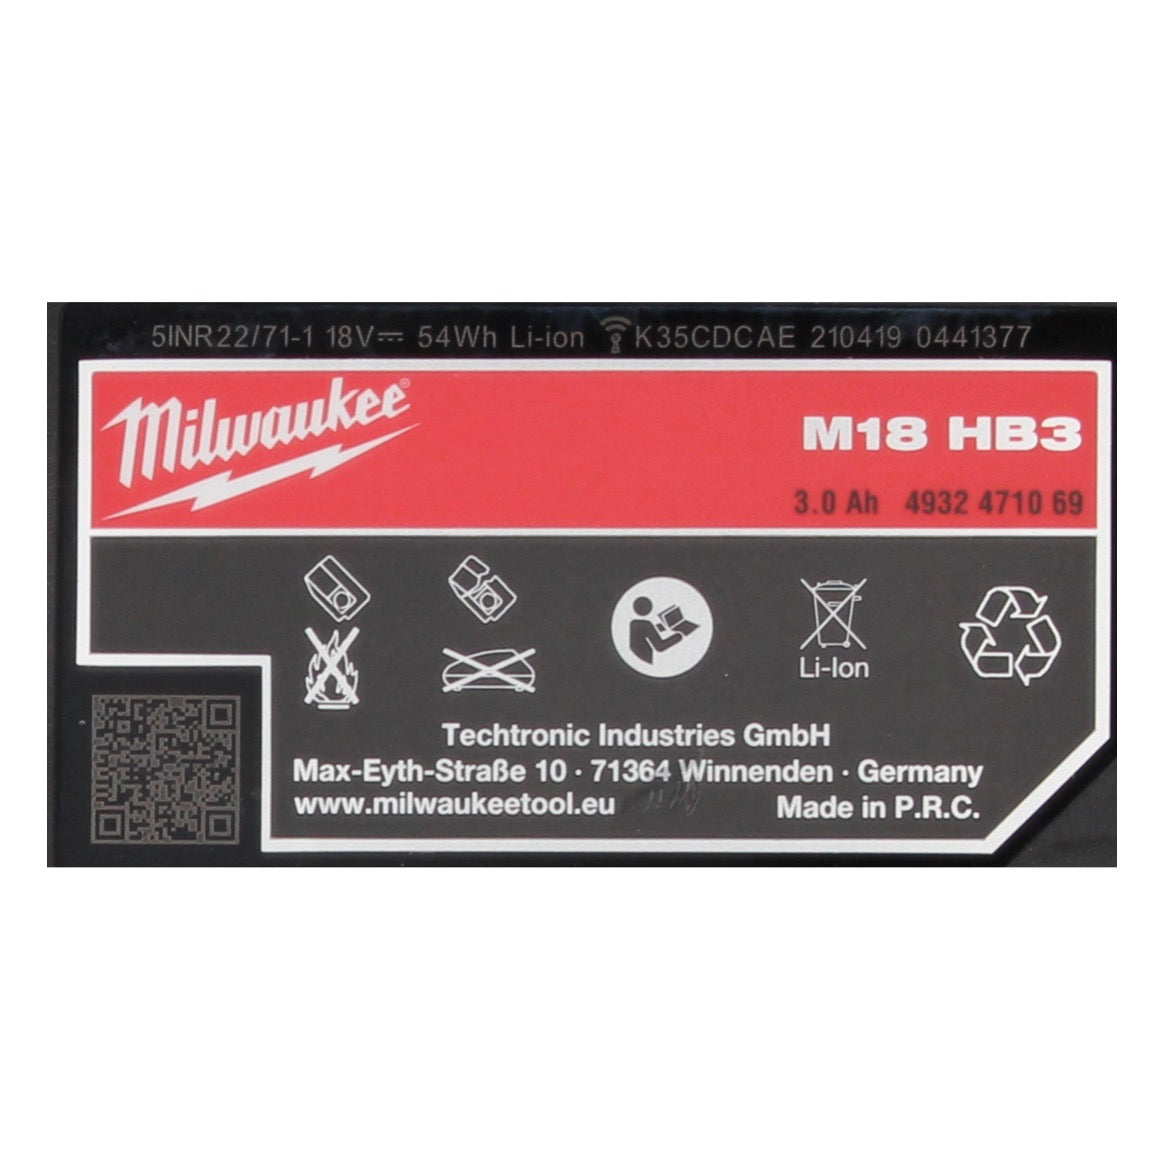 Milwaukee M18 HB3 High Output 18 V 3,0 Ah / 3000 mAh Li-Ion Akku ( 4932471069 ) mit Ladestandsanzeige - Toolbrothers